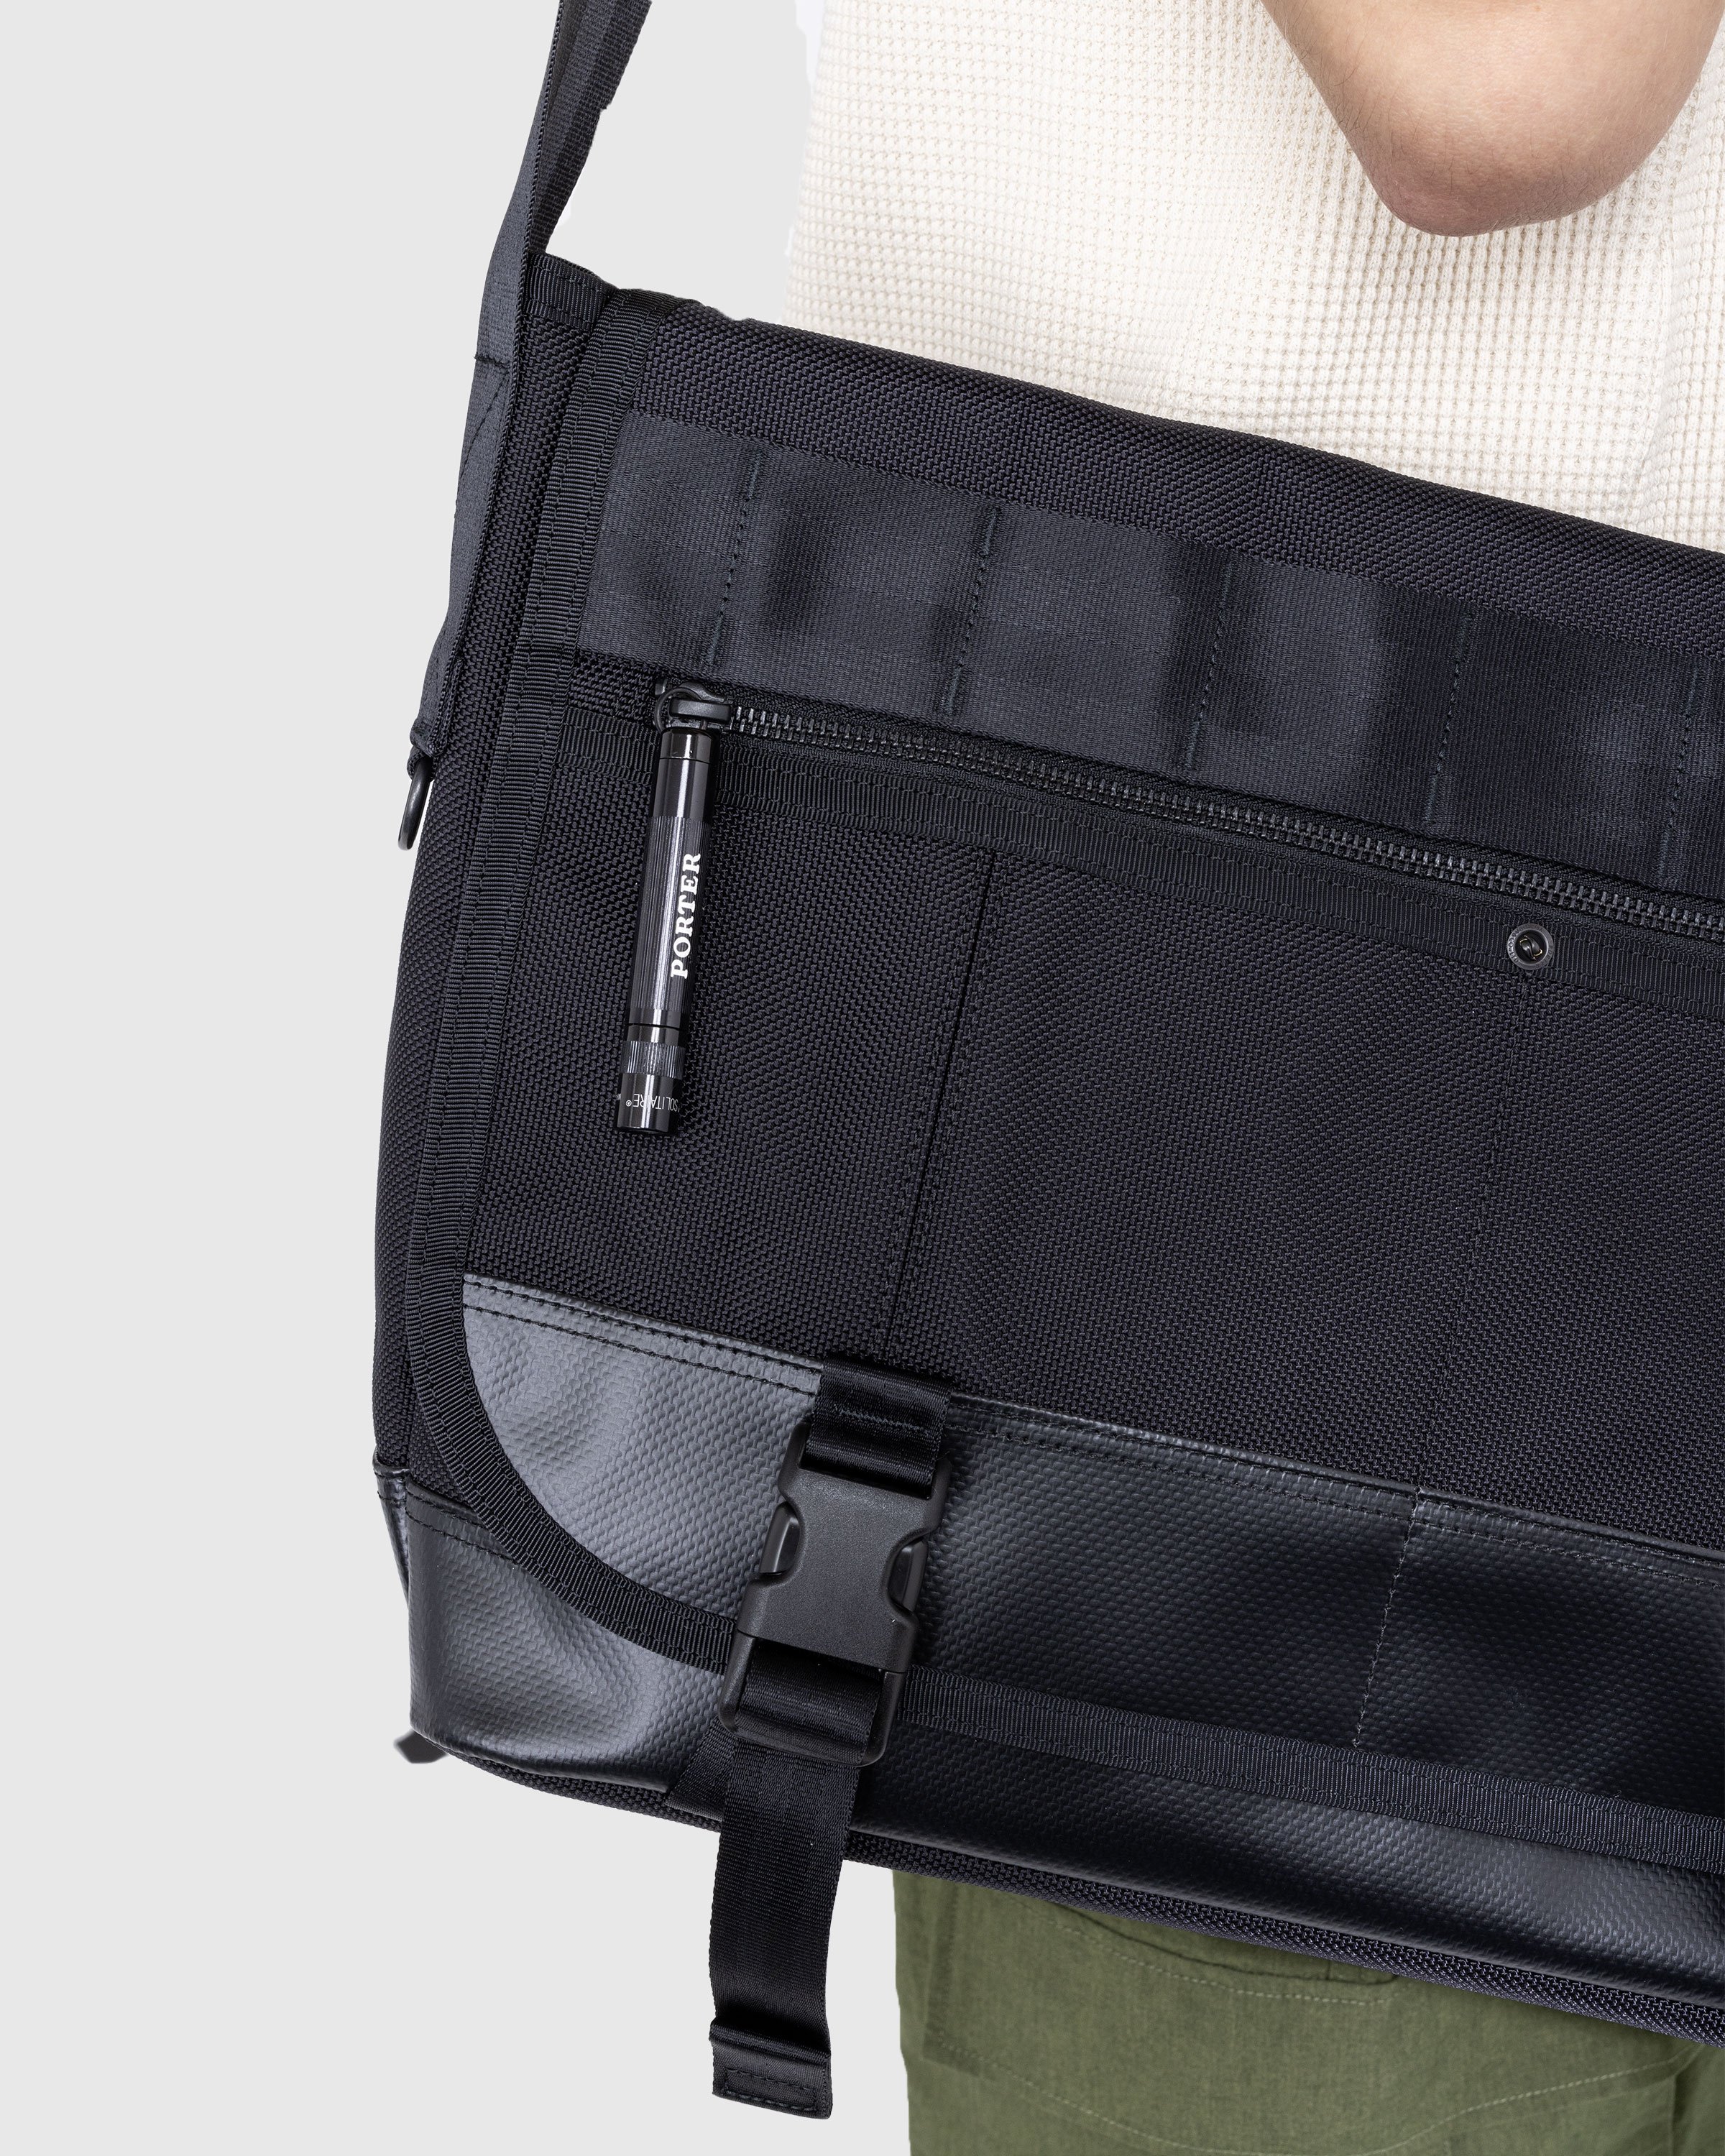 Porter-Yoshida & Co. - Heat Messenger Bag Black - Accessories - Black - Image 3